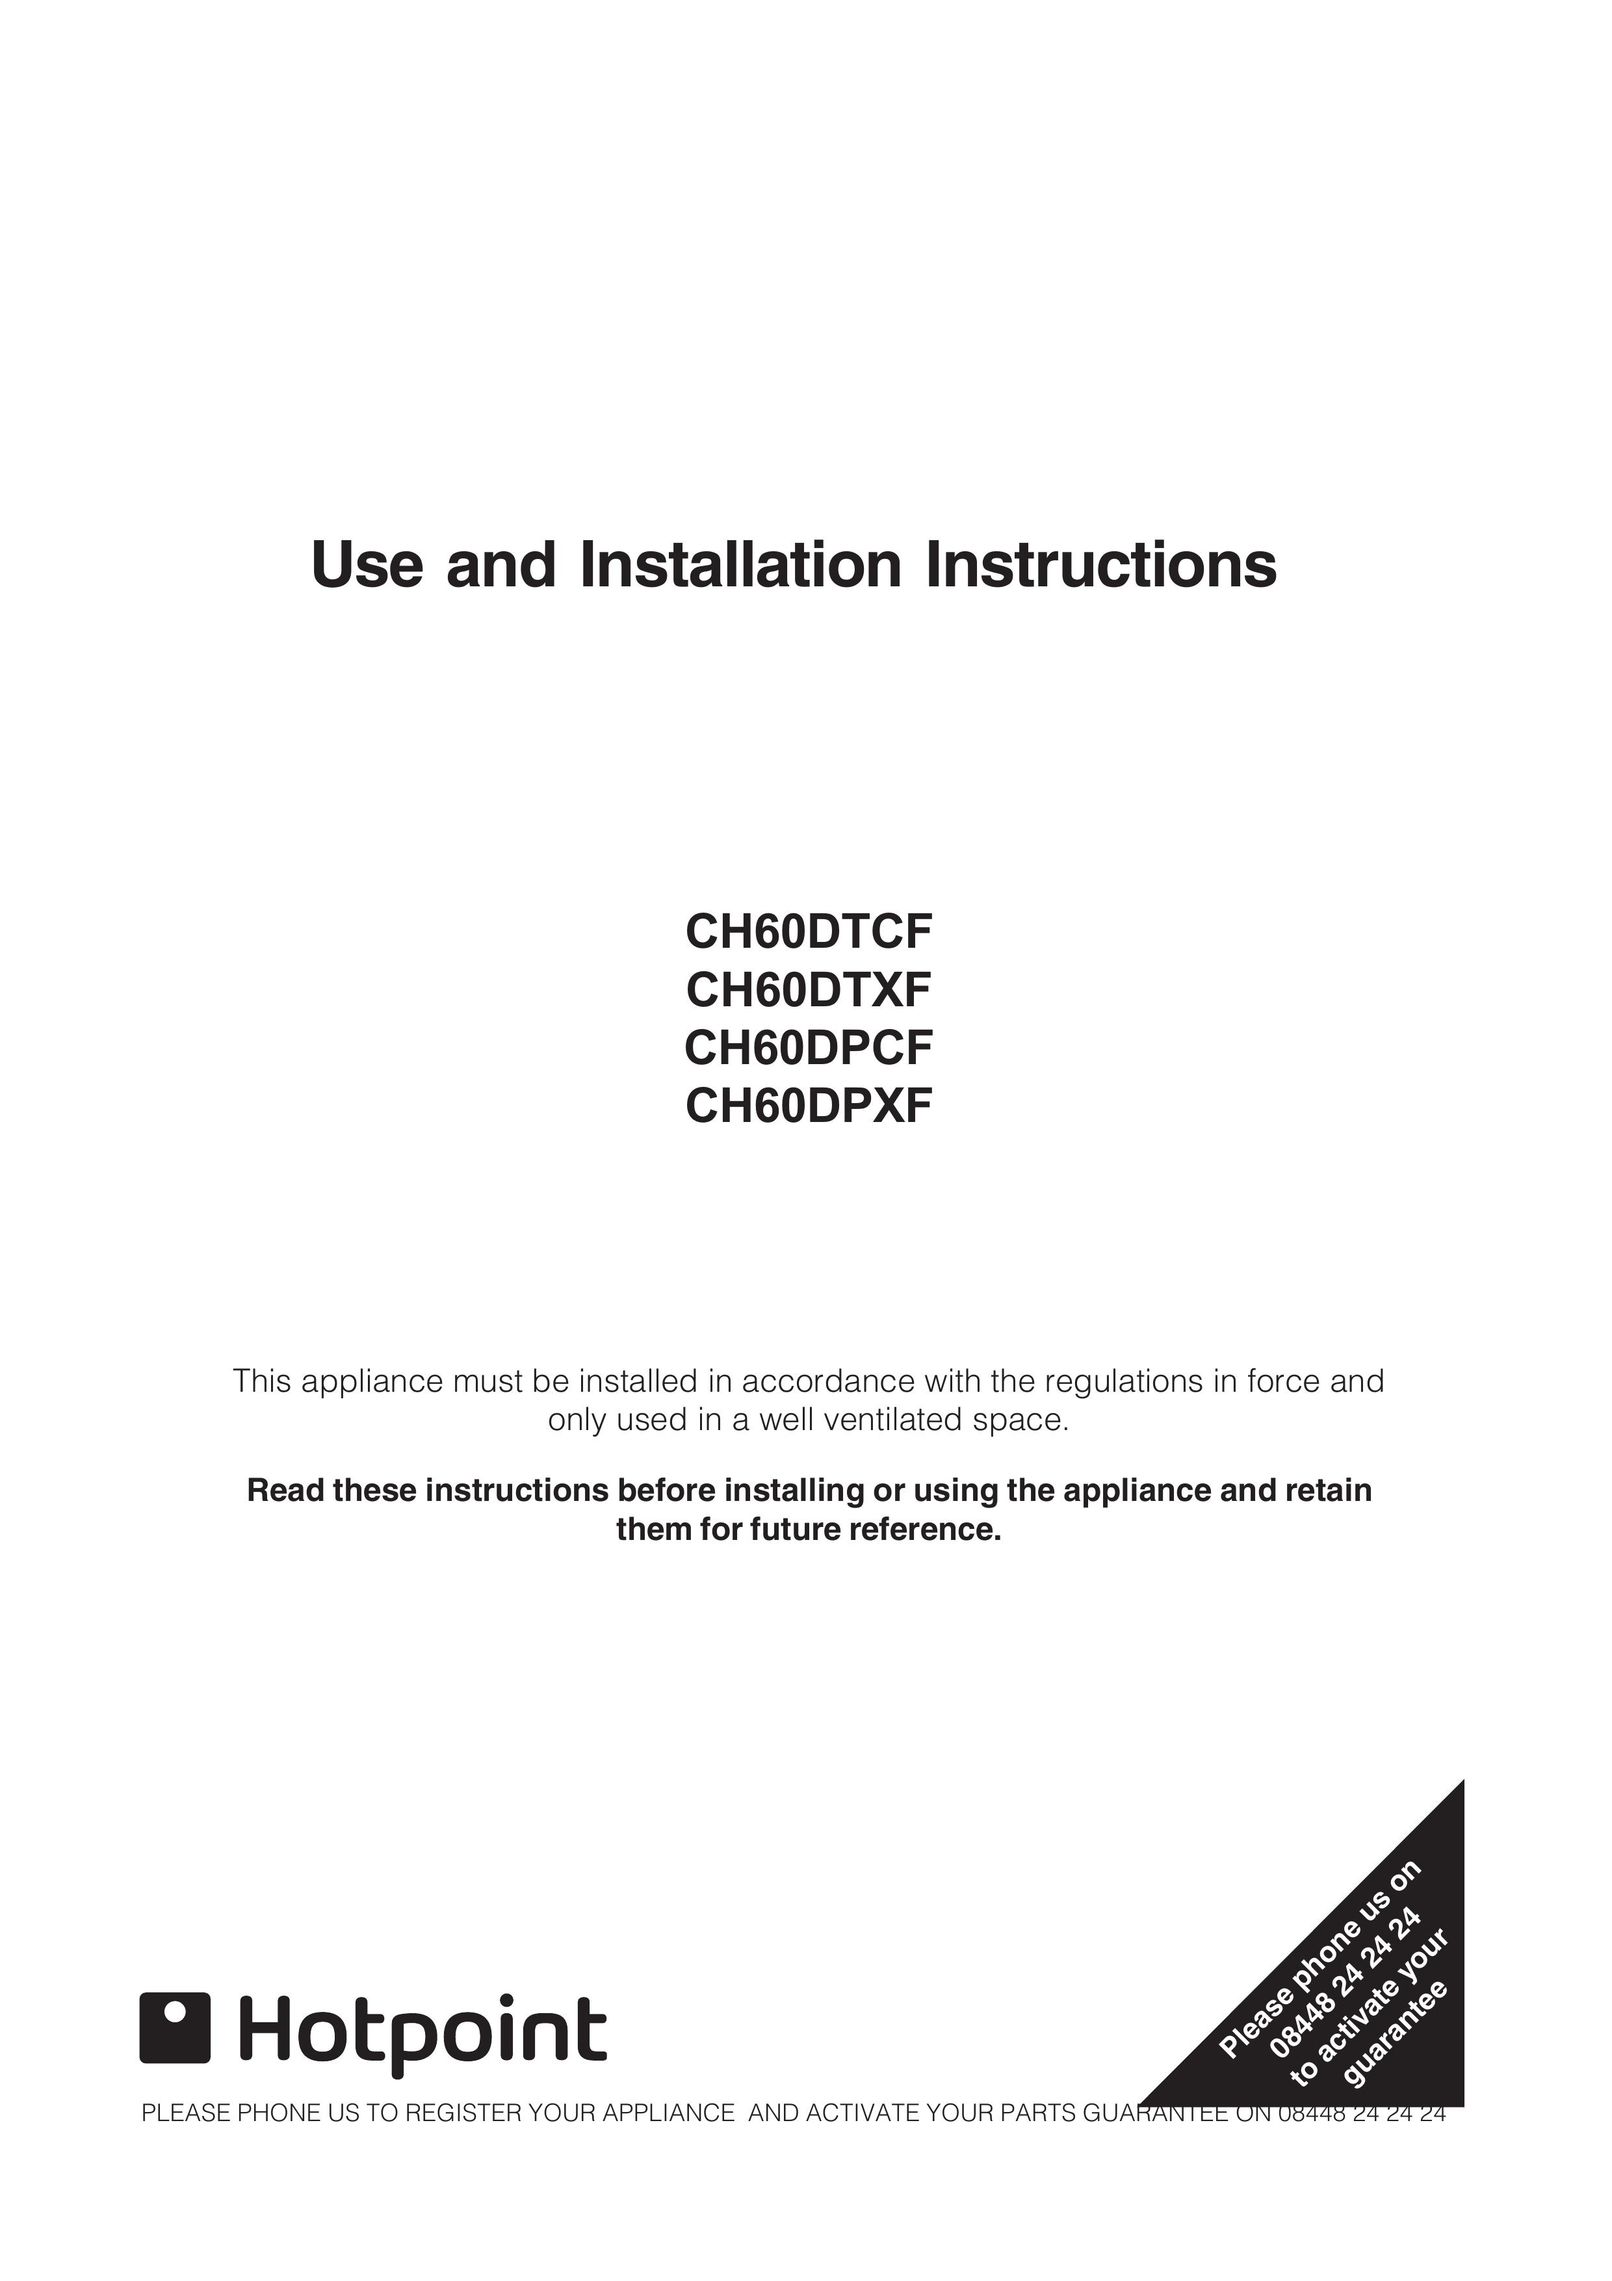 Xerox CH60DTXF Oven User Manual